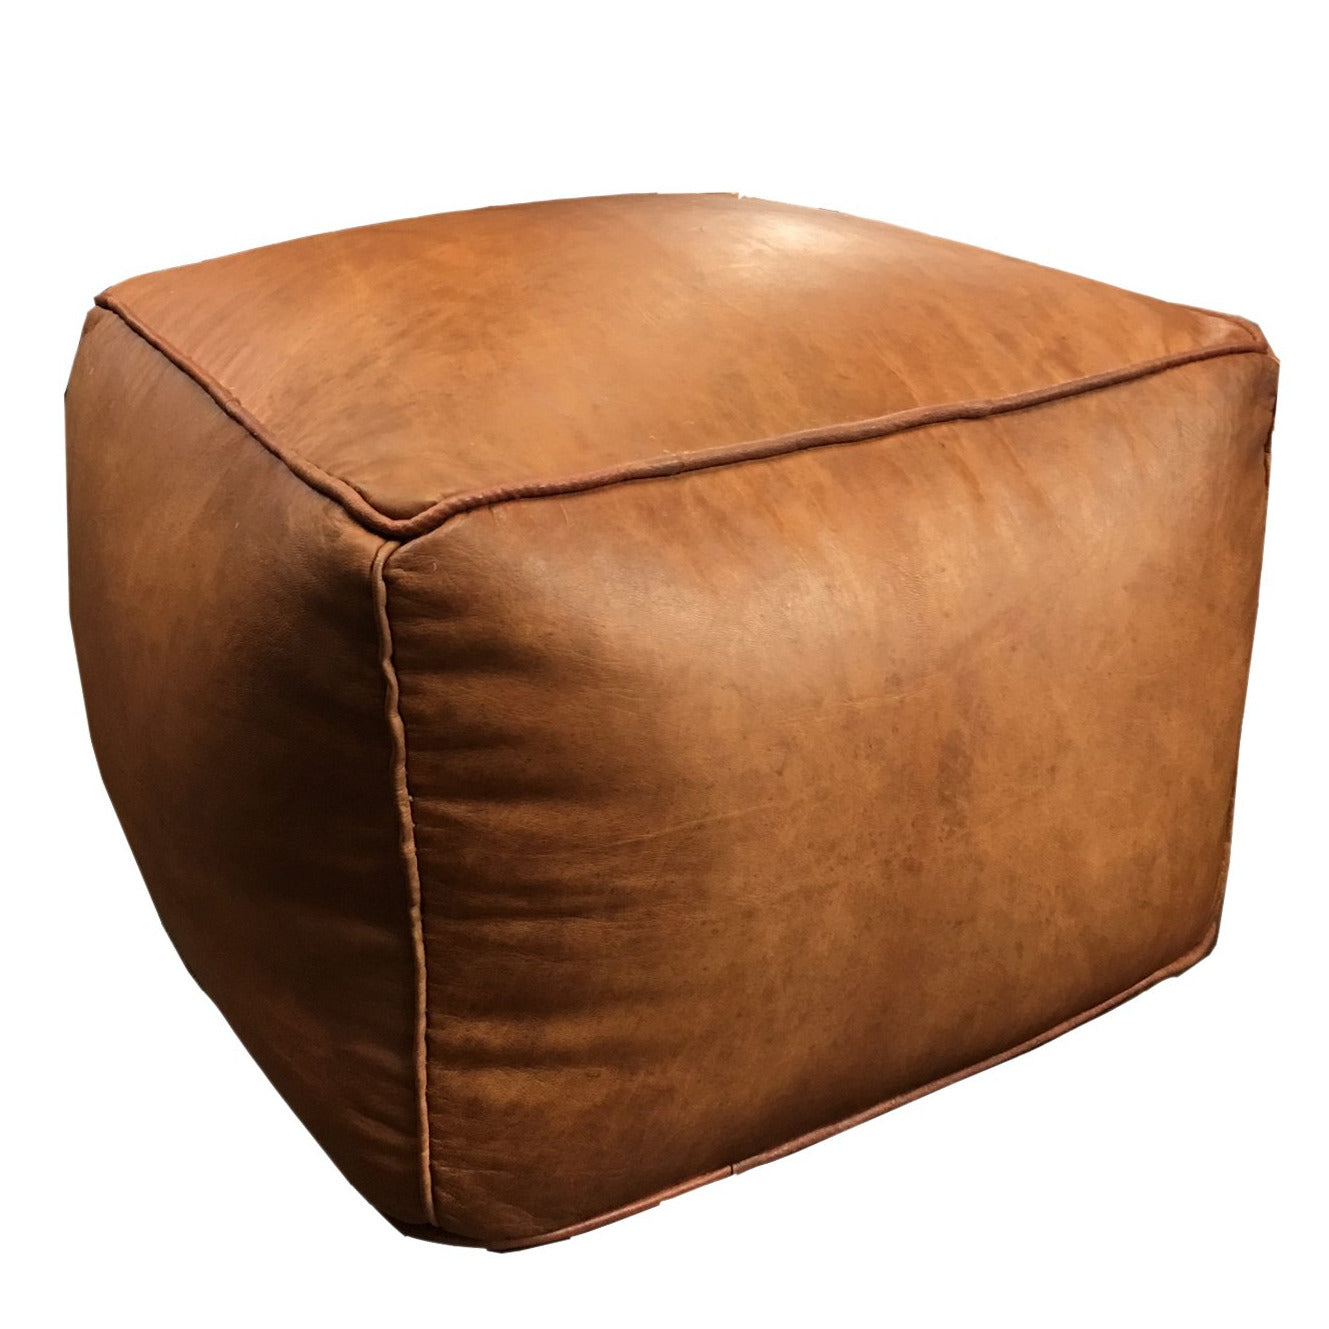 MPW Plaza® Pouf Square, Rustic Brown tone, 15" x 18" Topshelf Moroccan Leather,  ottoman (Stuffed) freeshipping - MPW Plaza®